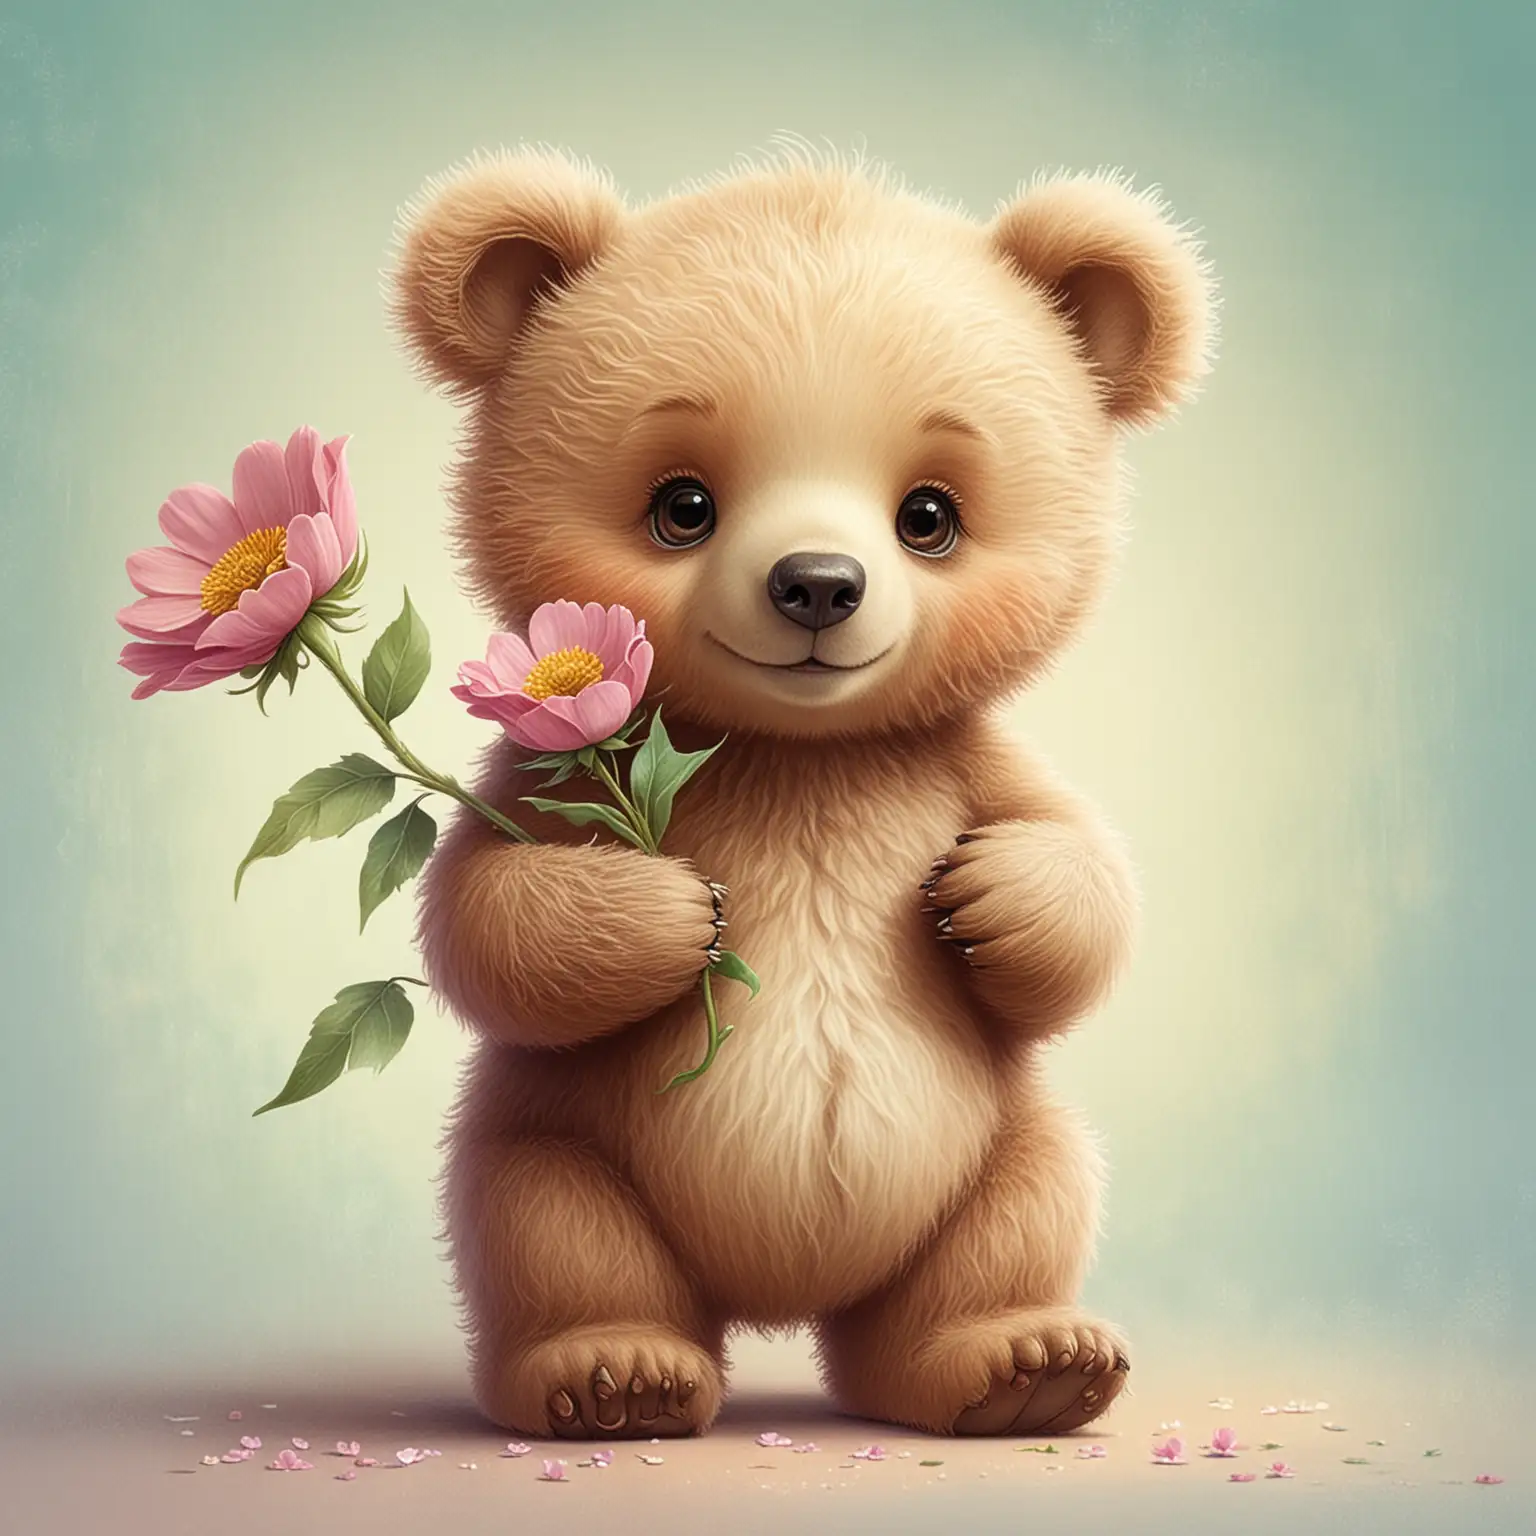 Adorable Cartoon Baby Bear with Flower in Whimsical Fairytale Scene